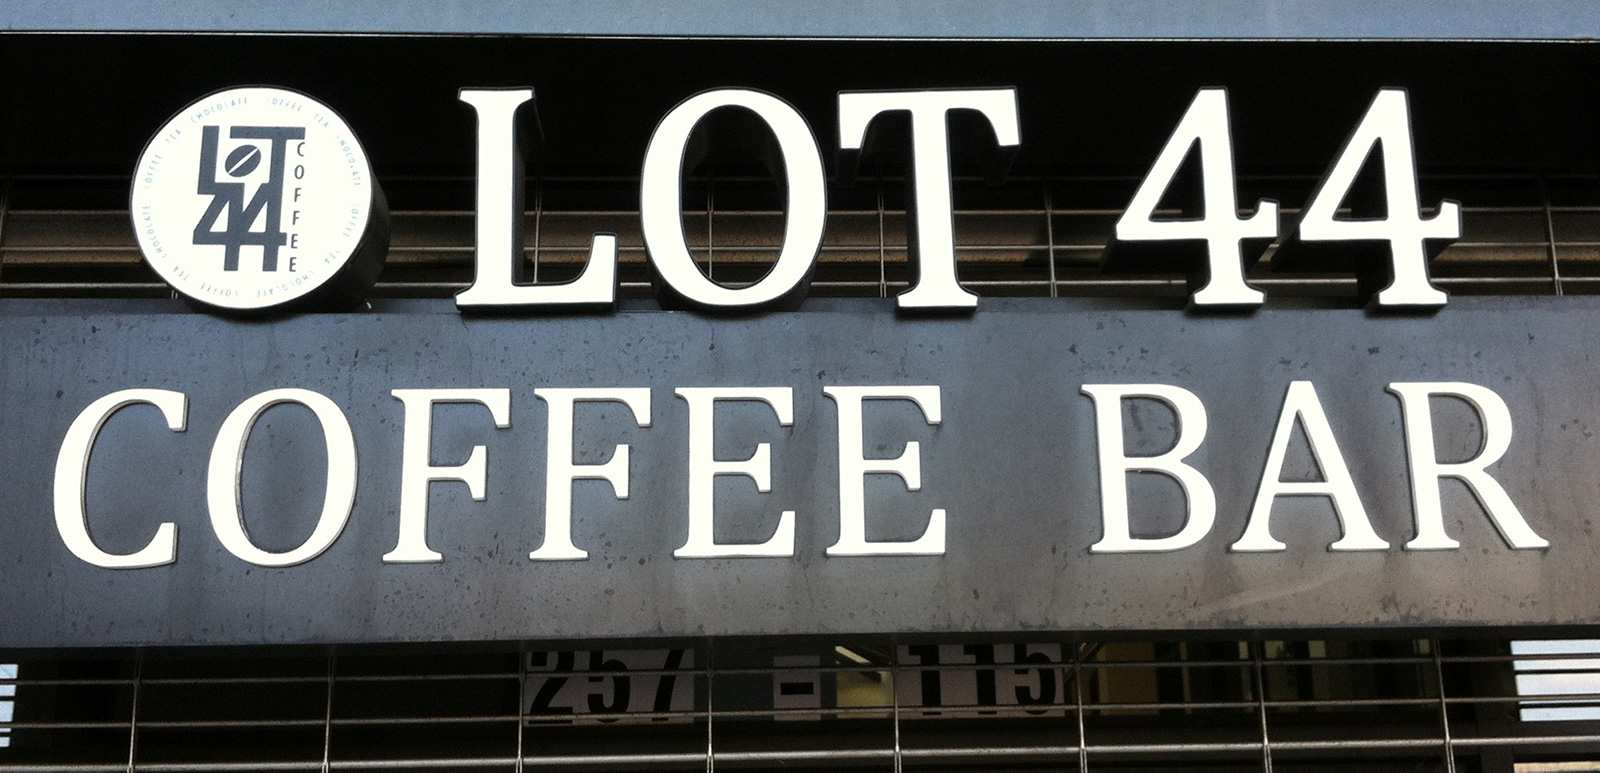 Lot 44 Coffee sign